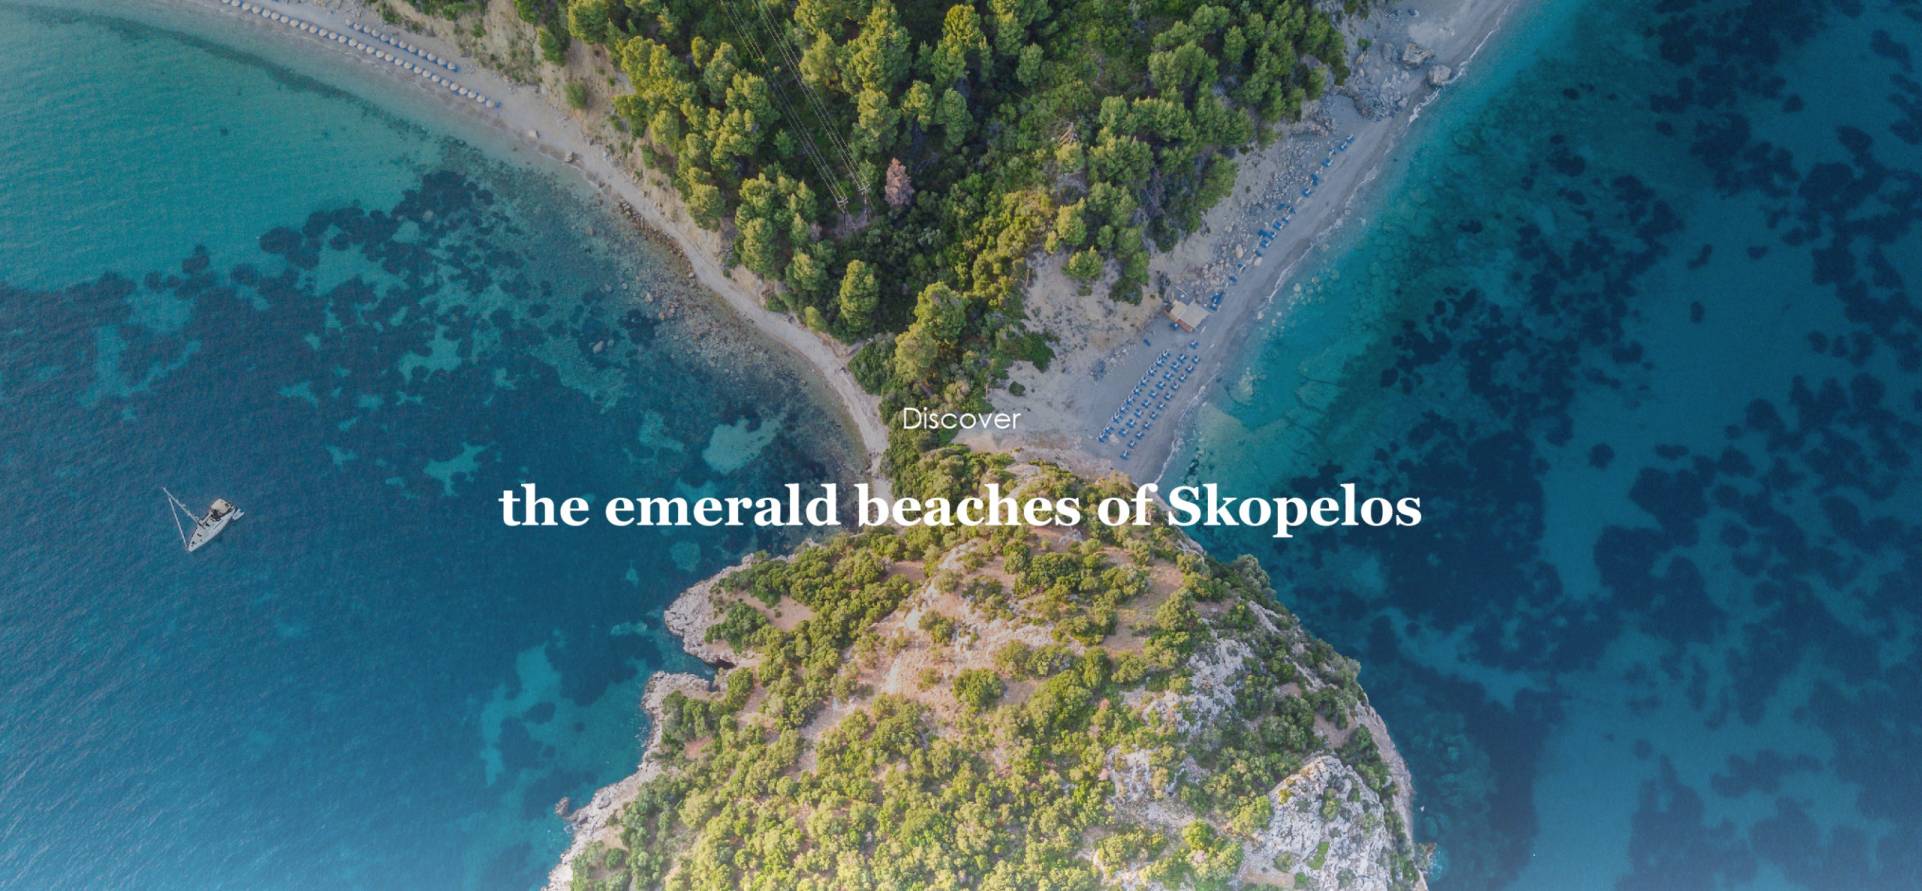 Discover the emerald beaches of Skopelos island